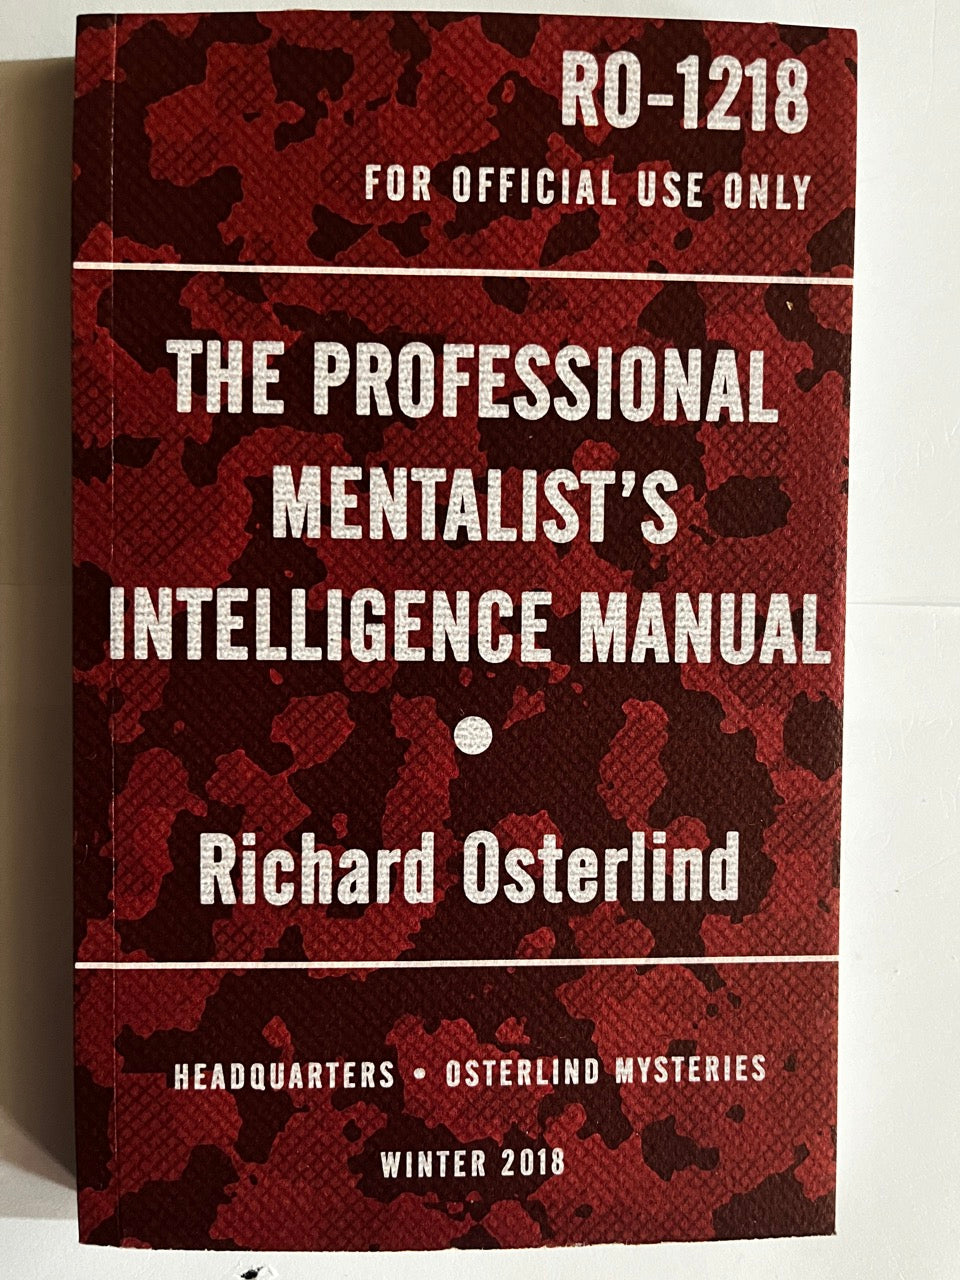 The Professional Mentalist's Intelligence Manual - Richard Osterlind